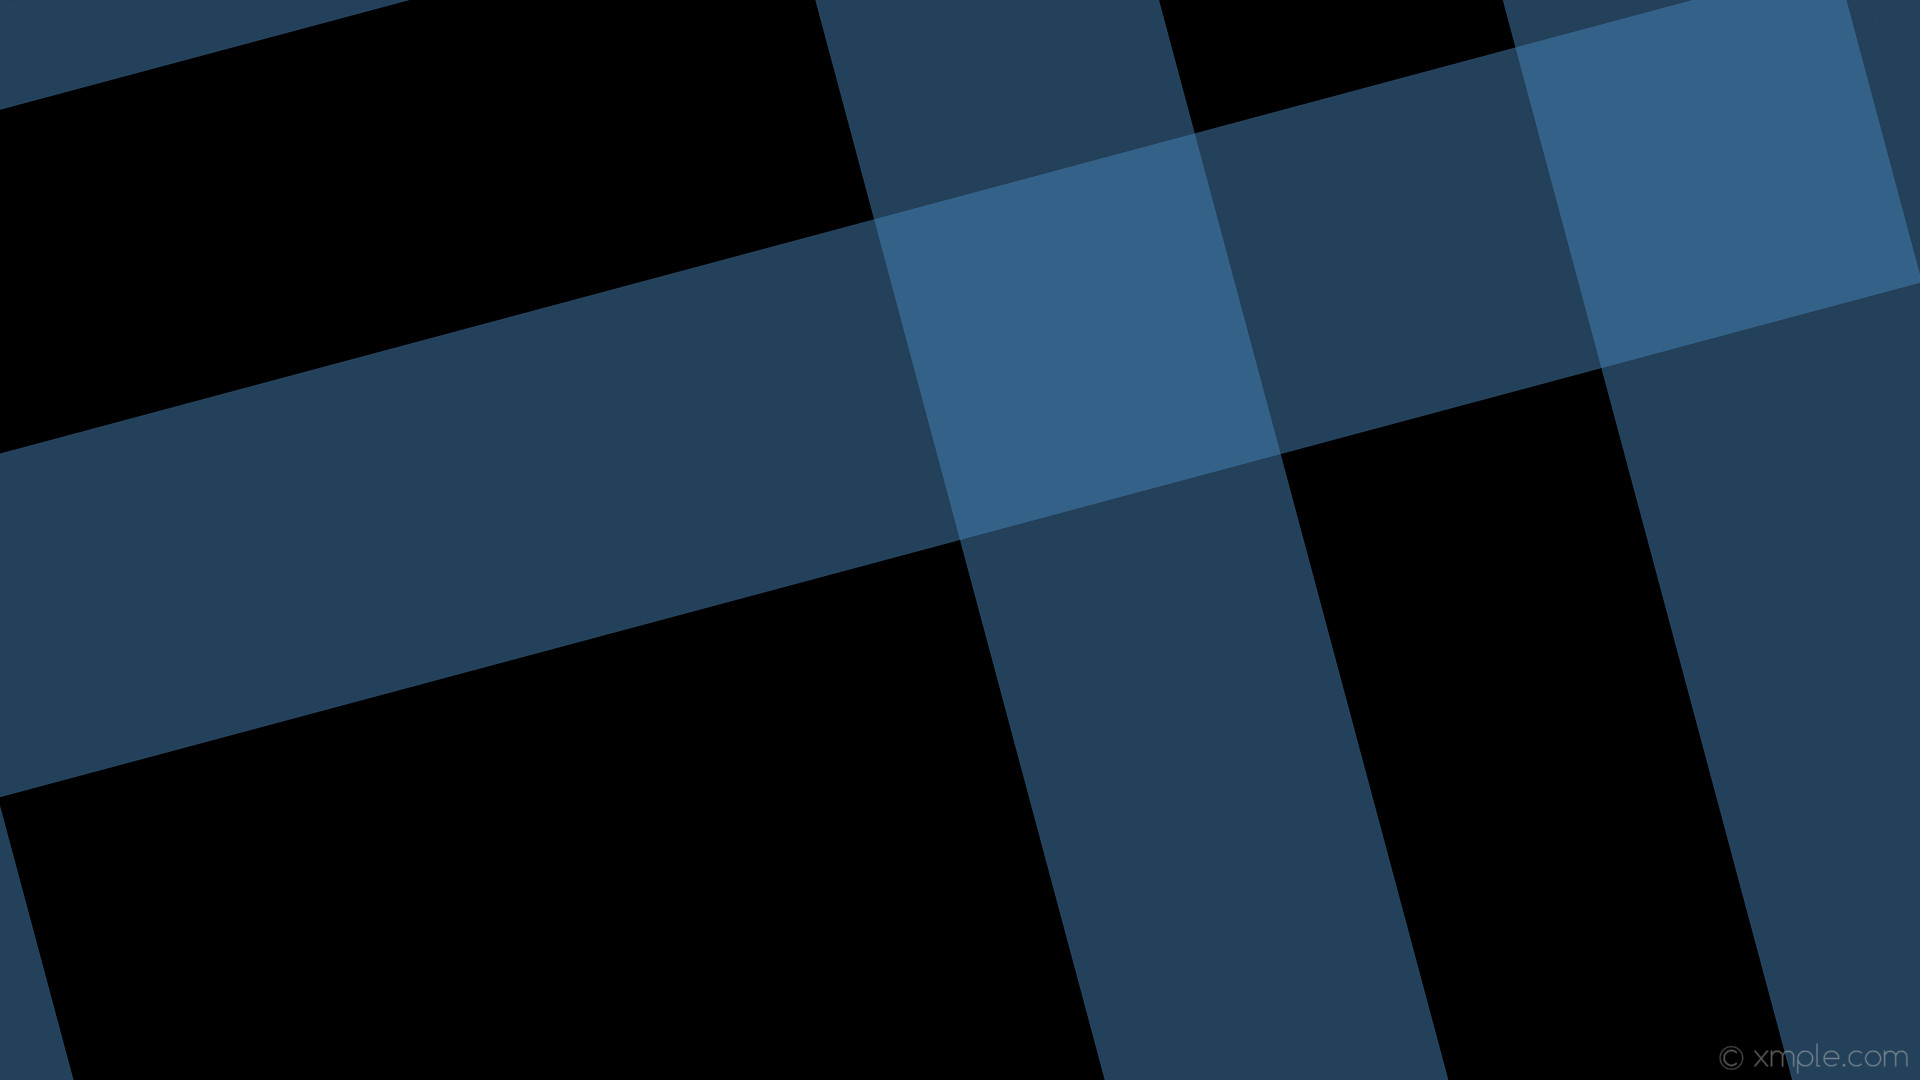 1920x1080 wallpaper striped dual blue gingham black steel blue #000000 #4682b4 105Â°  332px